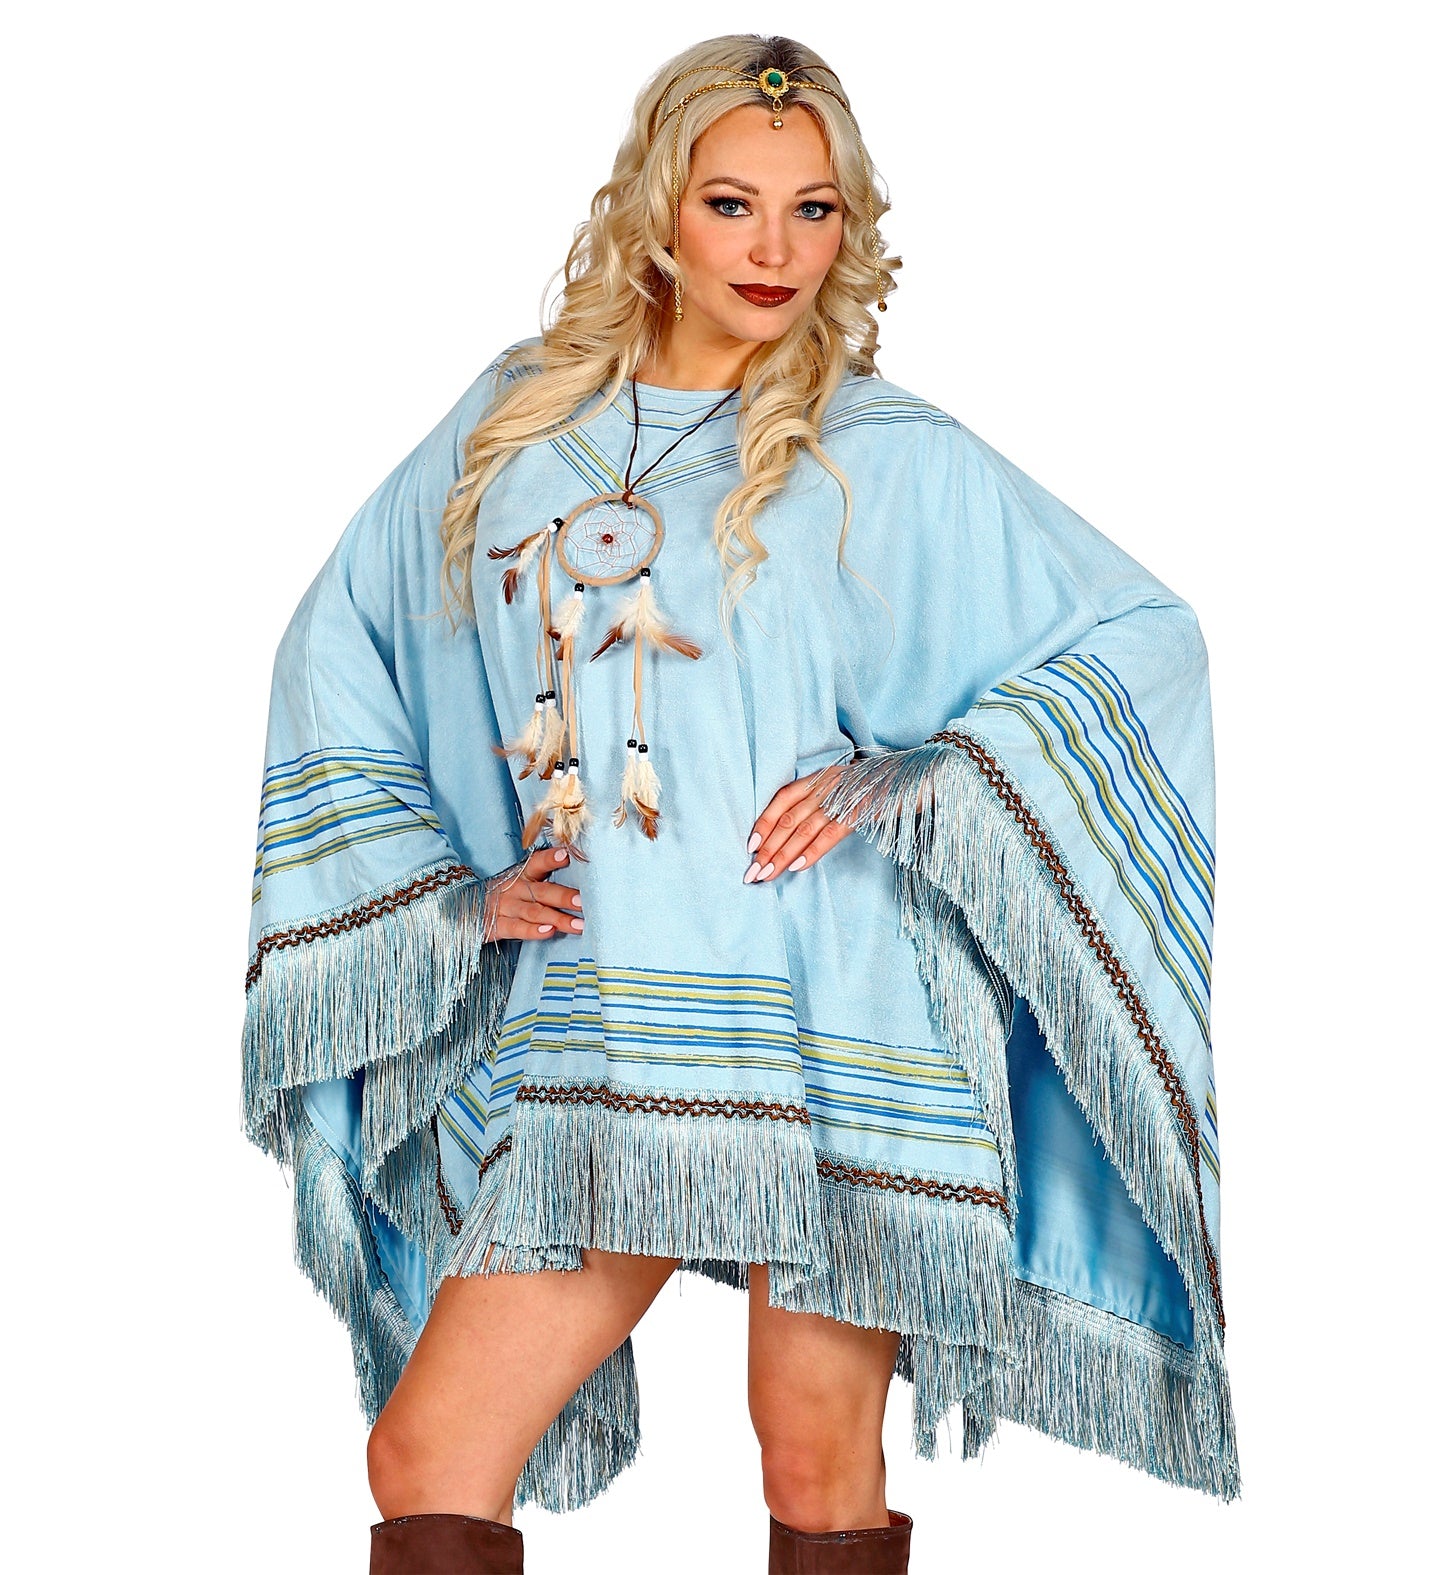 Native American Indian Blue Poncho Costume